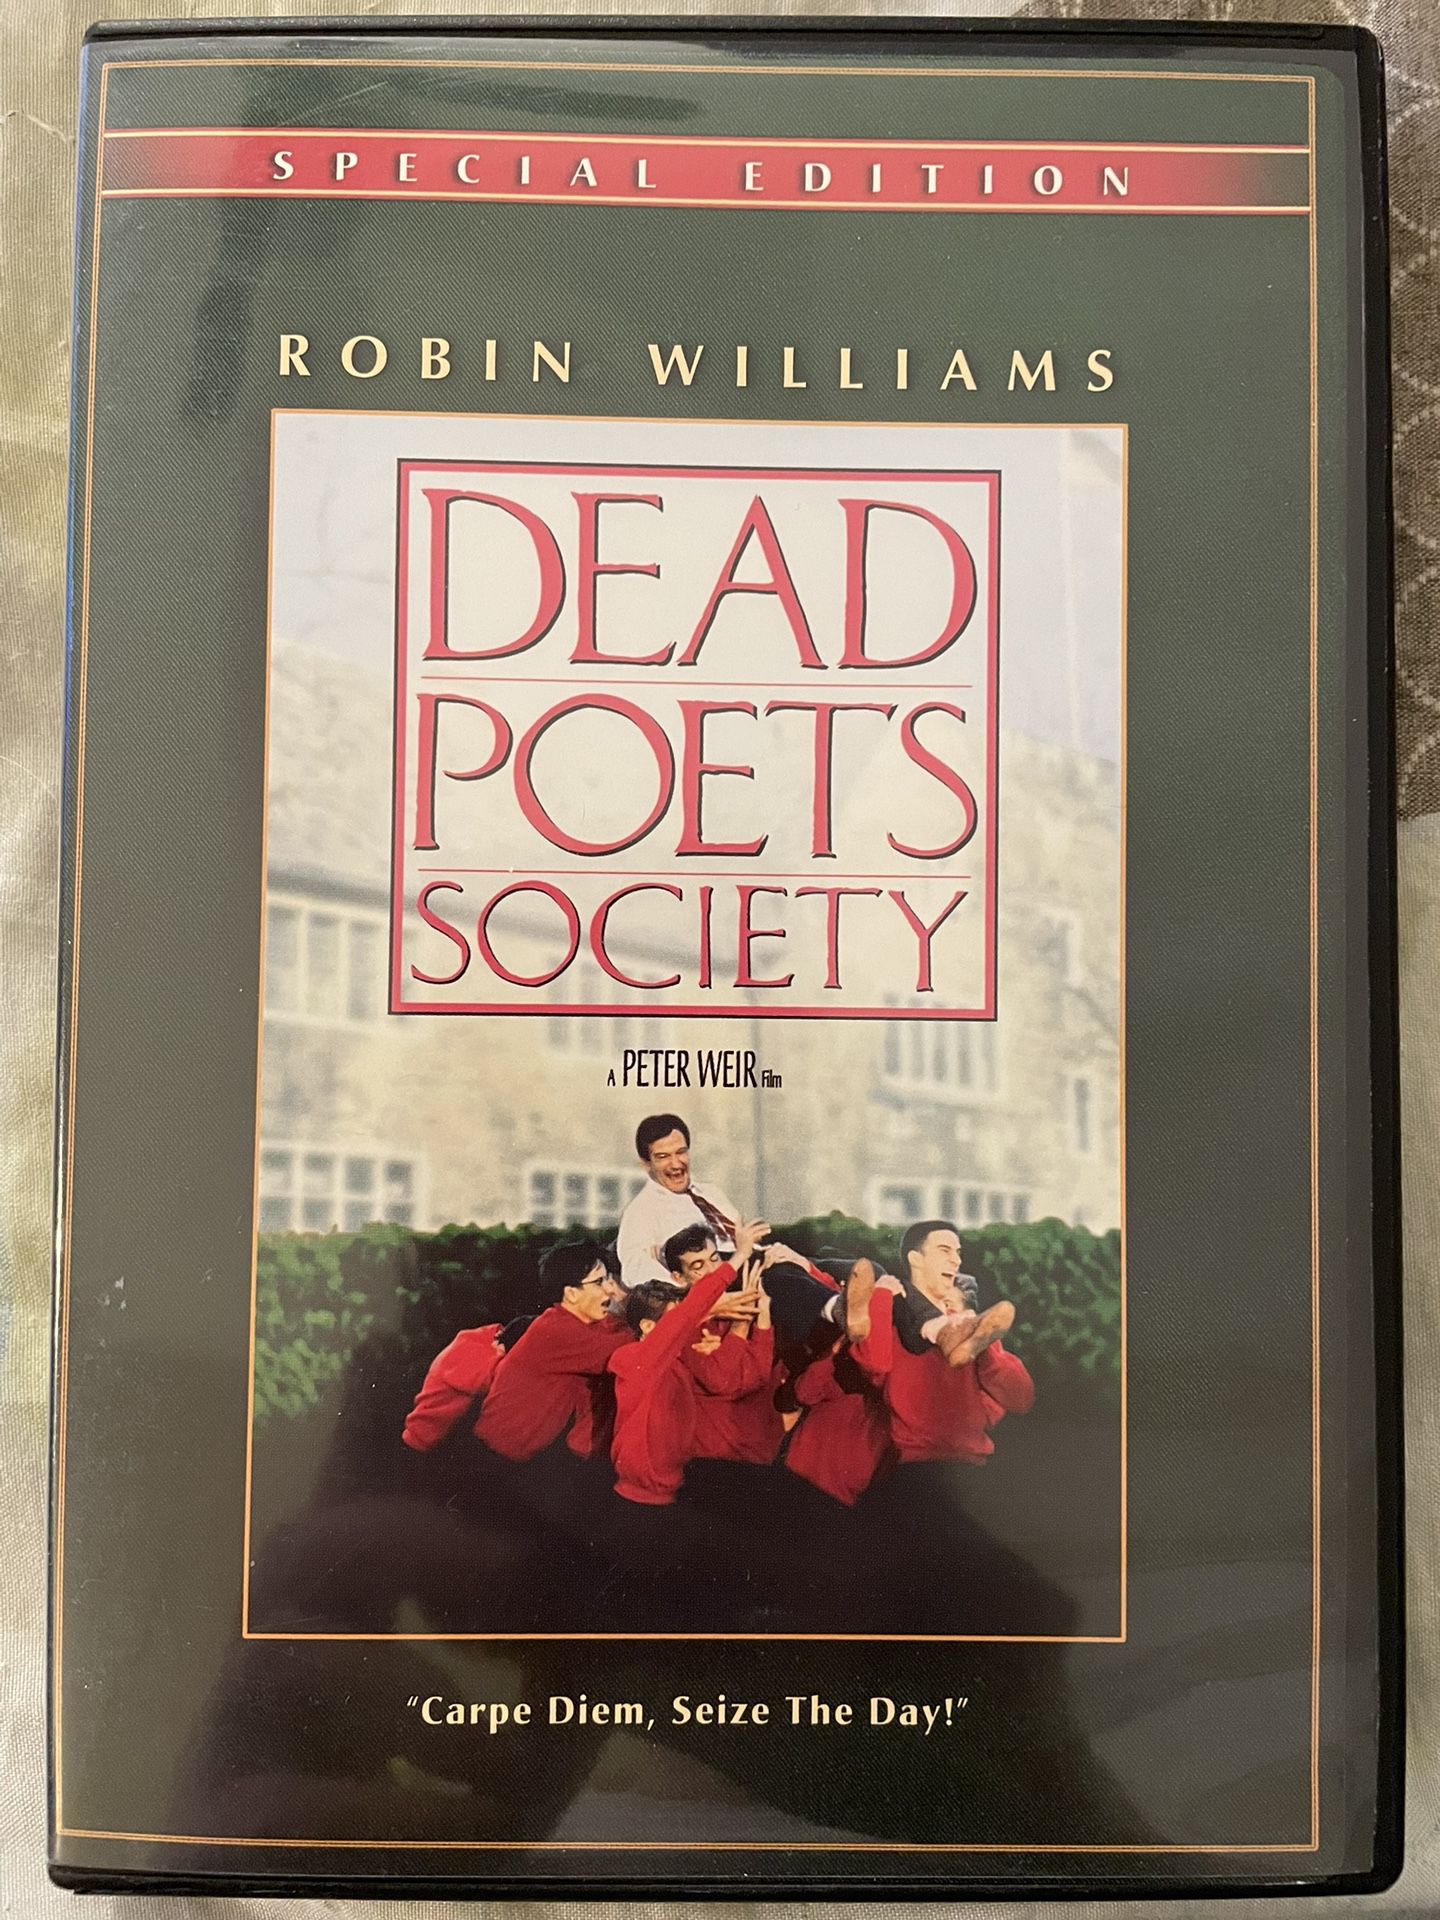 DEAD POETS SOCIETY (DVD) ROBIN WILLIAMS 